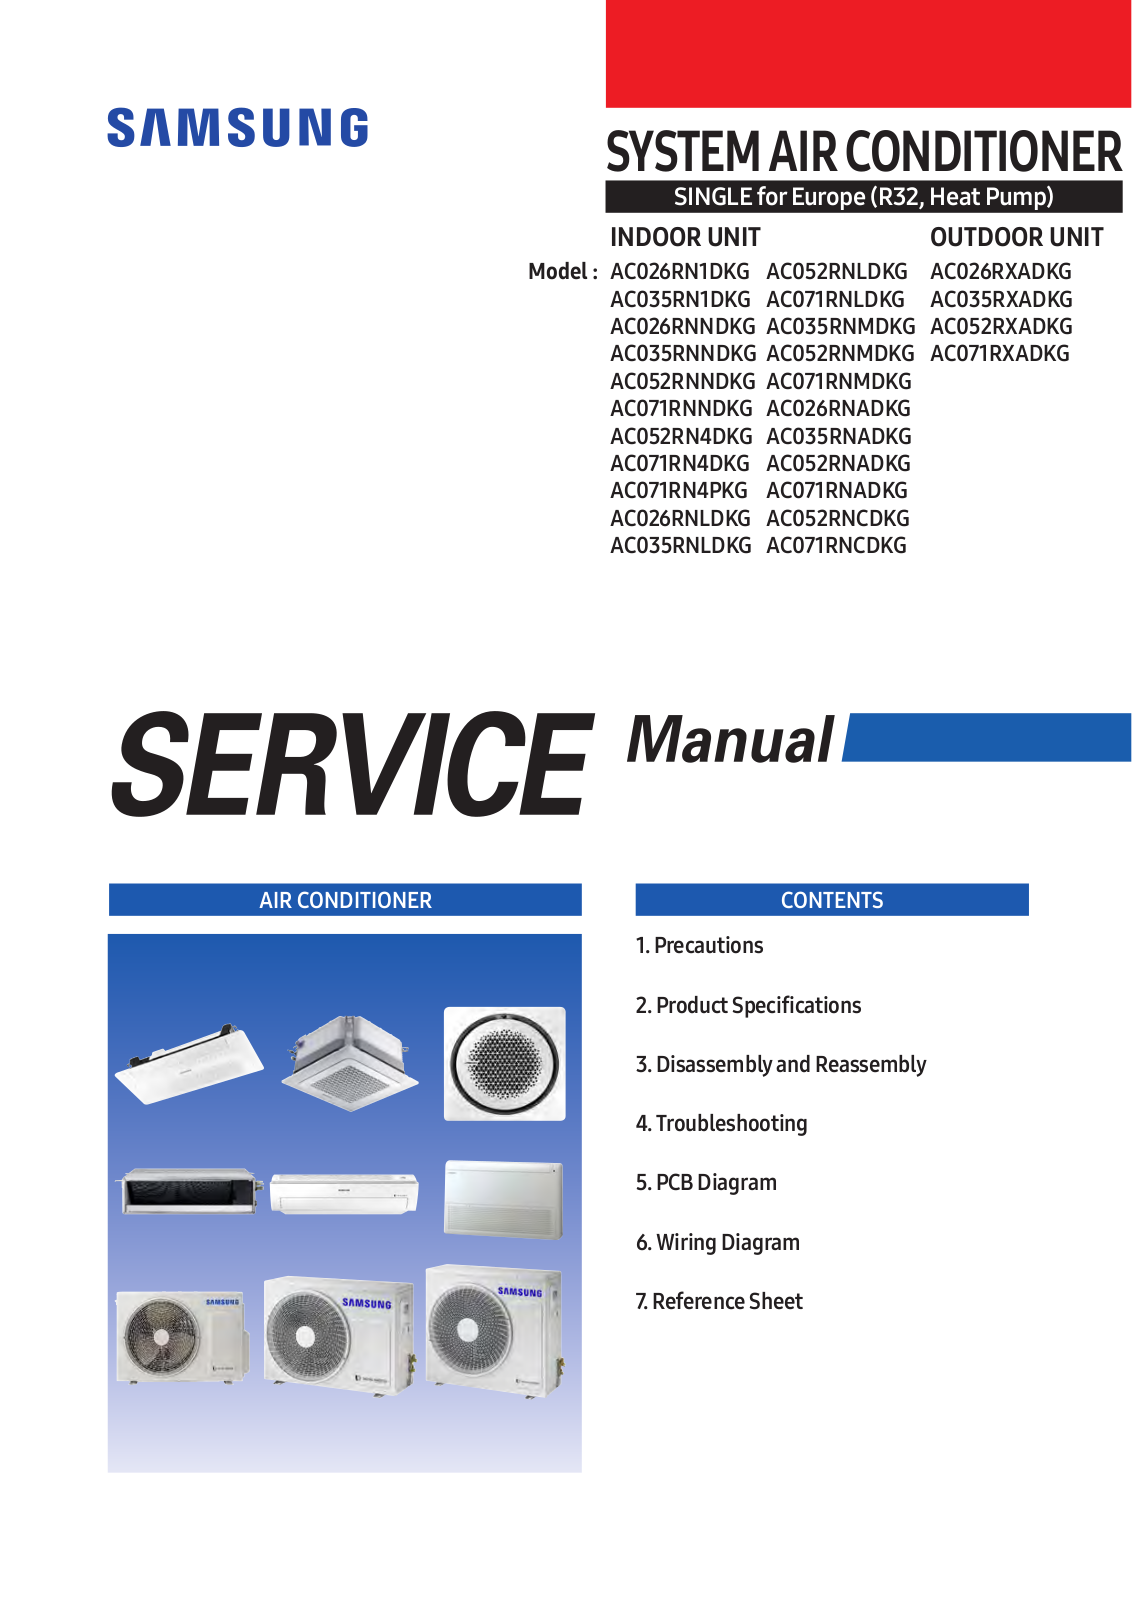 Samsung AC071RNNDKG, AC026RNNDKG, AC052RN4DKG, AC071RN4DKG, AC071RN4PKG Service Manual